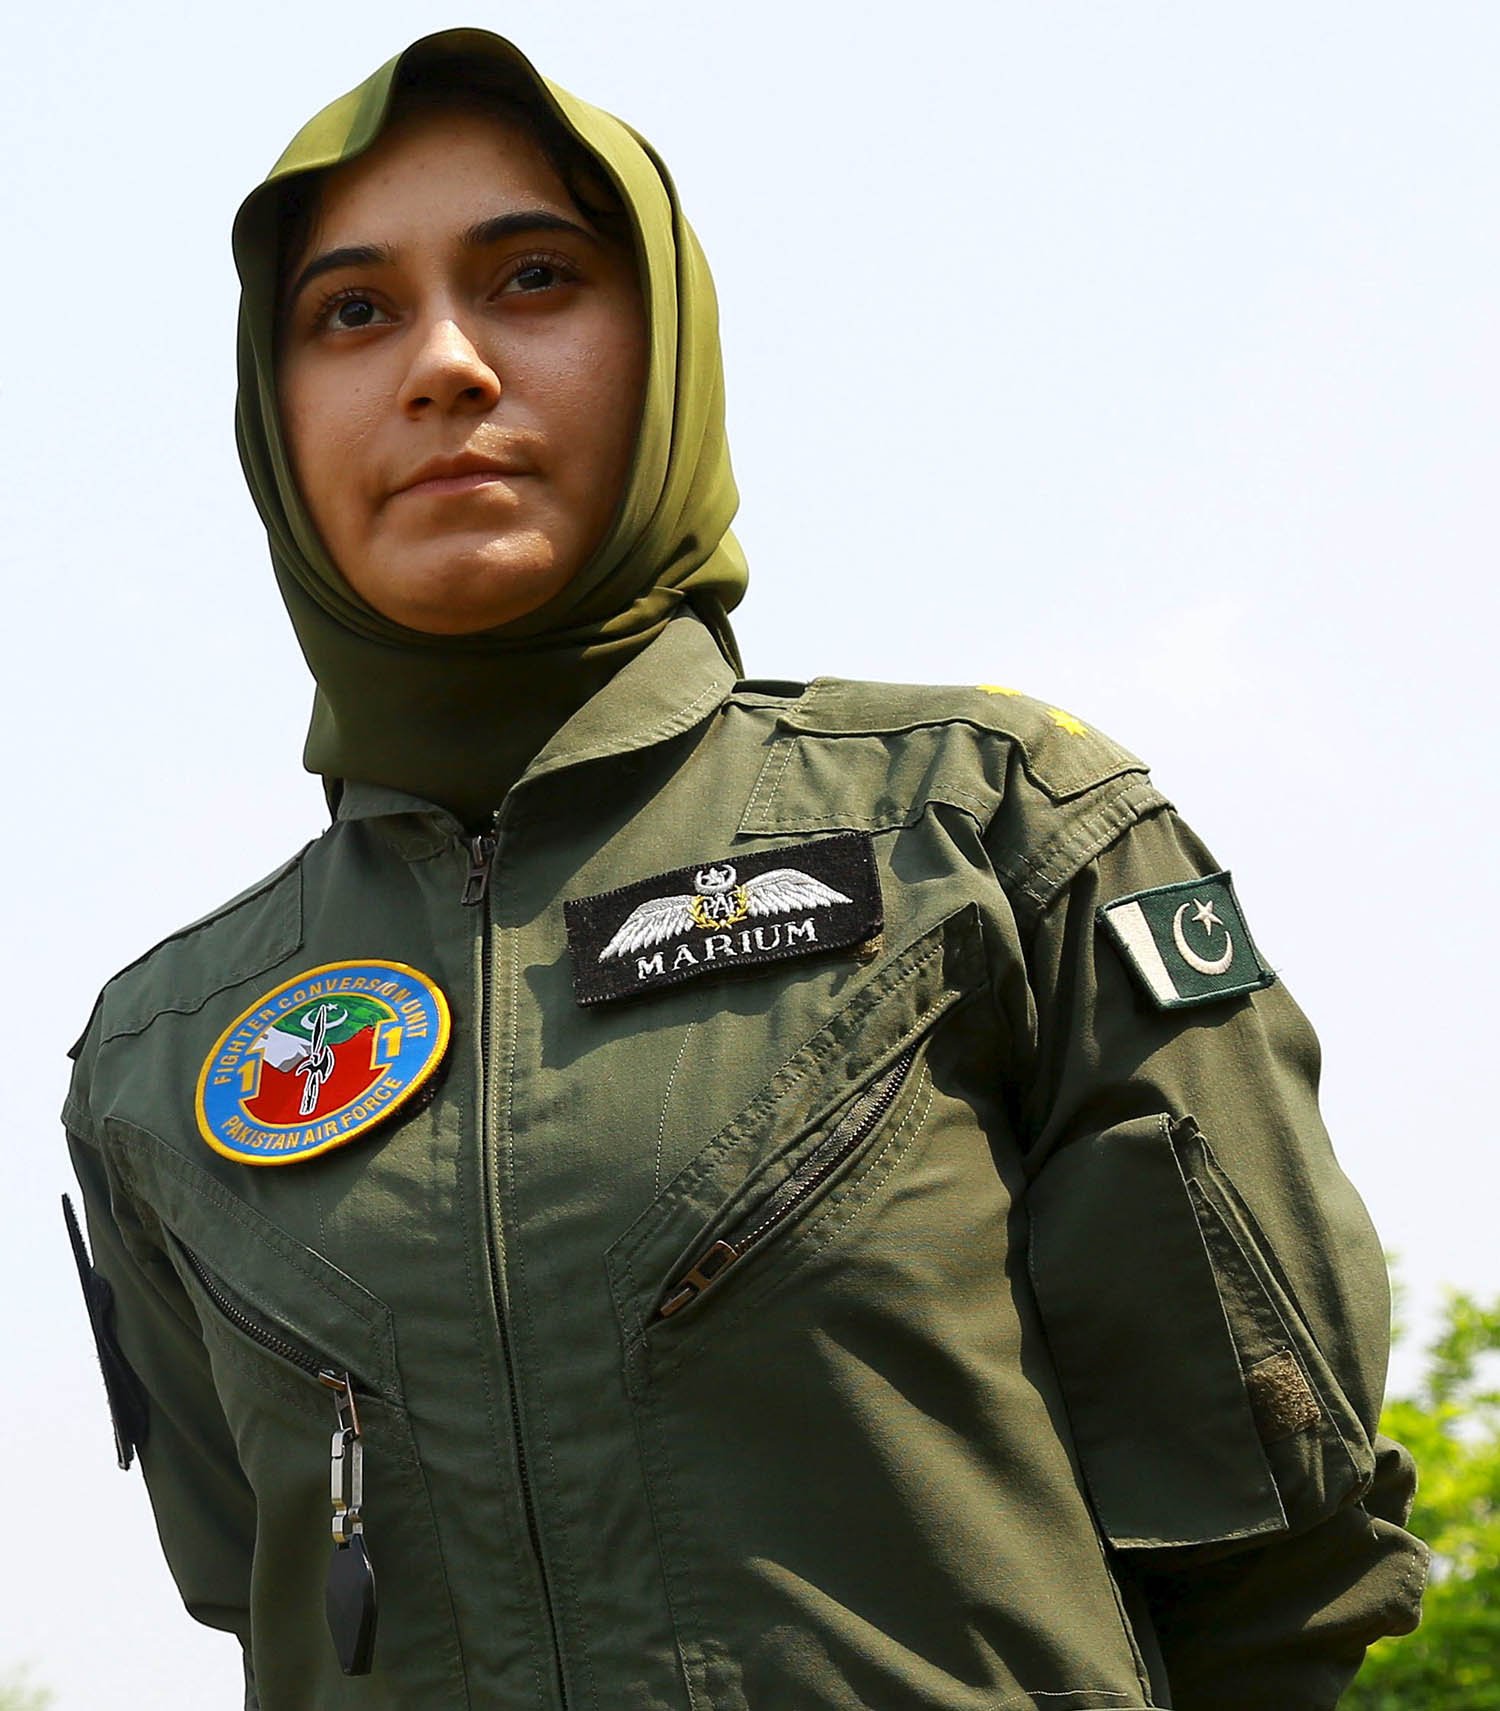 Mariam Mukhtiar: An extraordinary woman and pilot